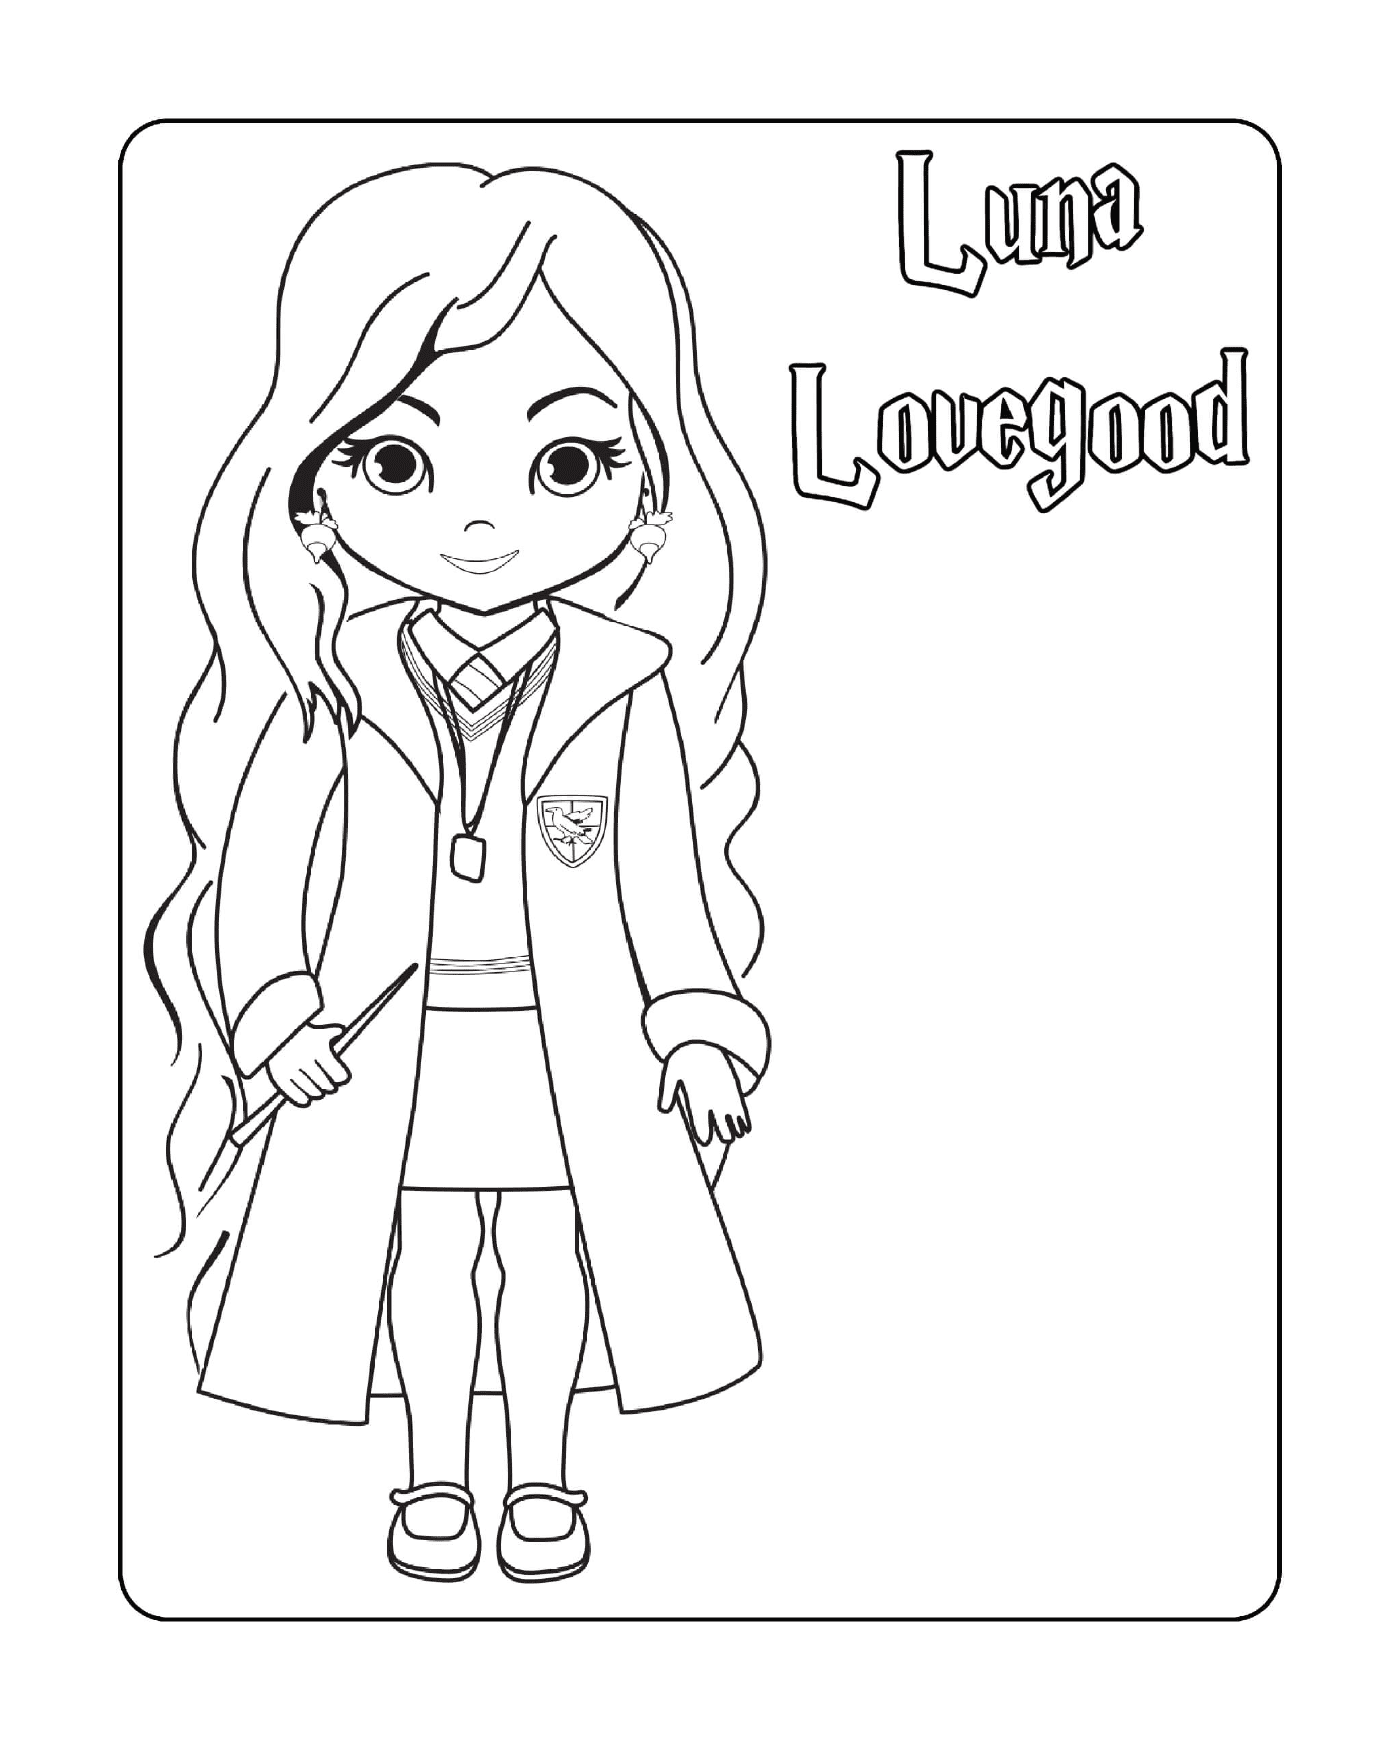  Luna Lovegood, varinha na mão 